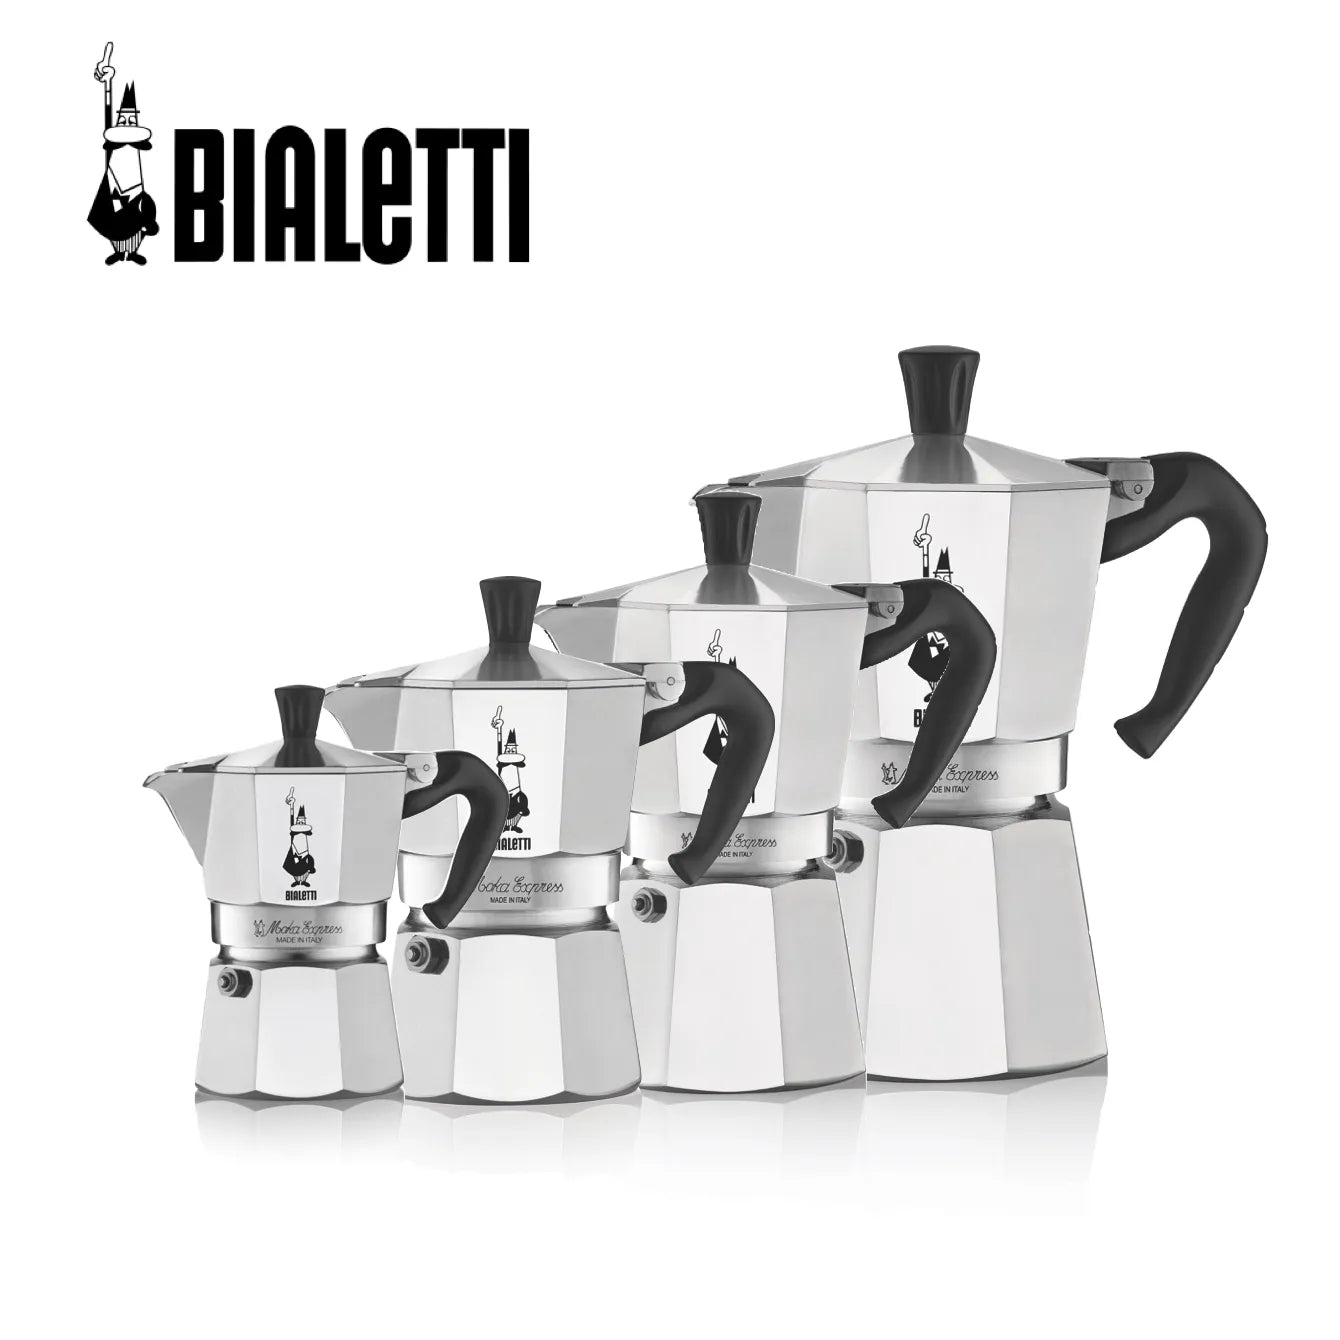 Bialetti's Coffee Making Tools